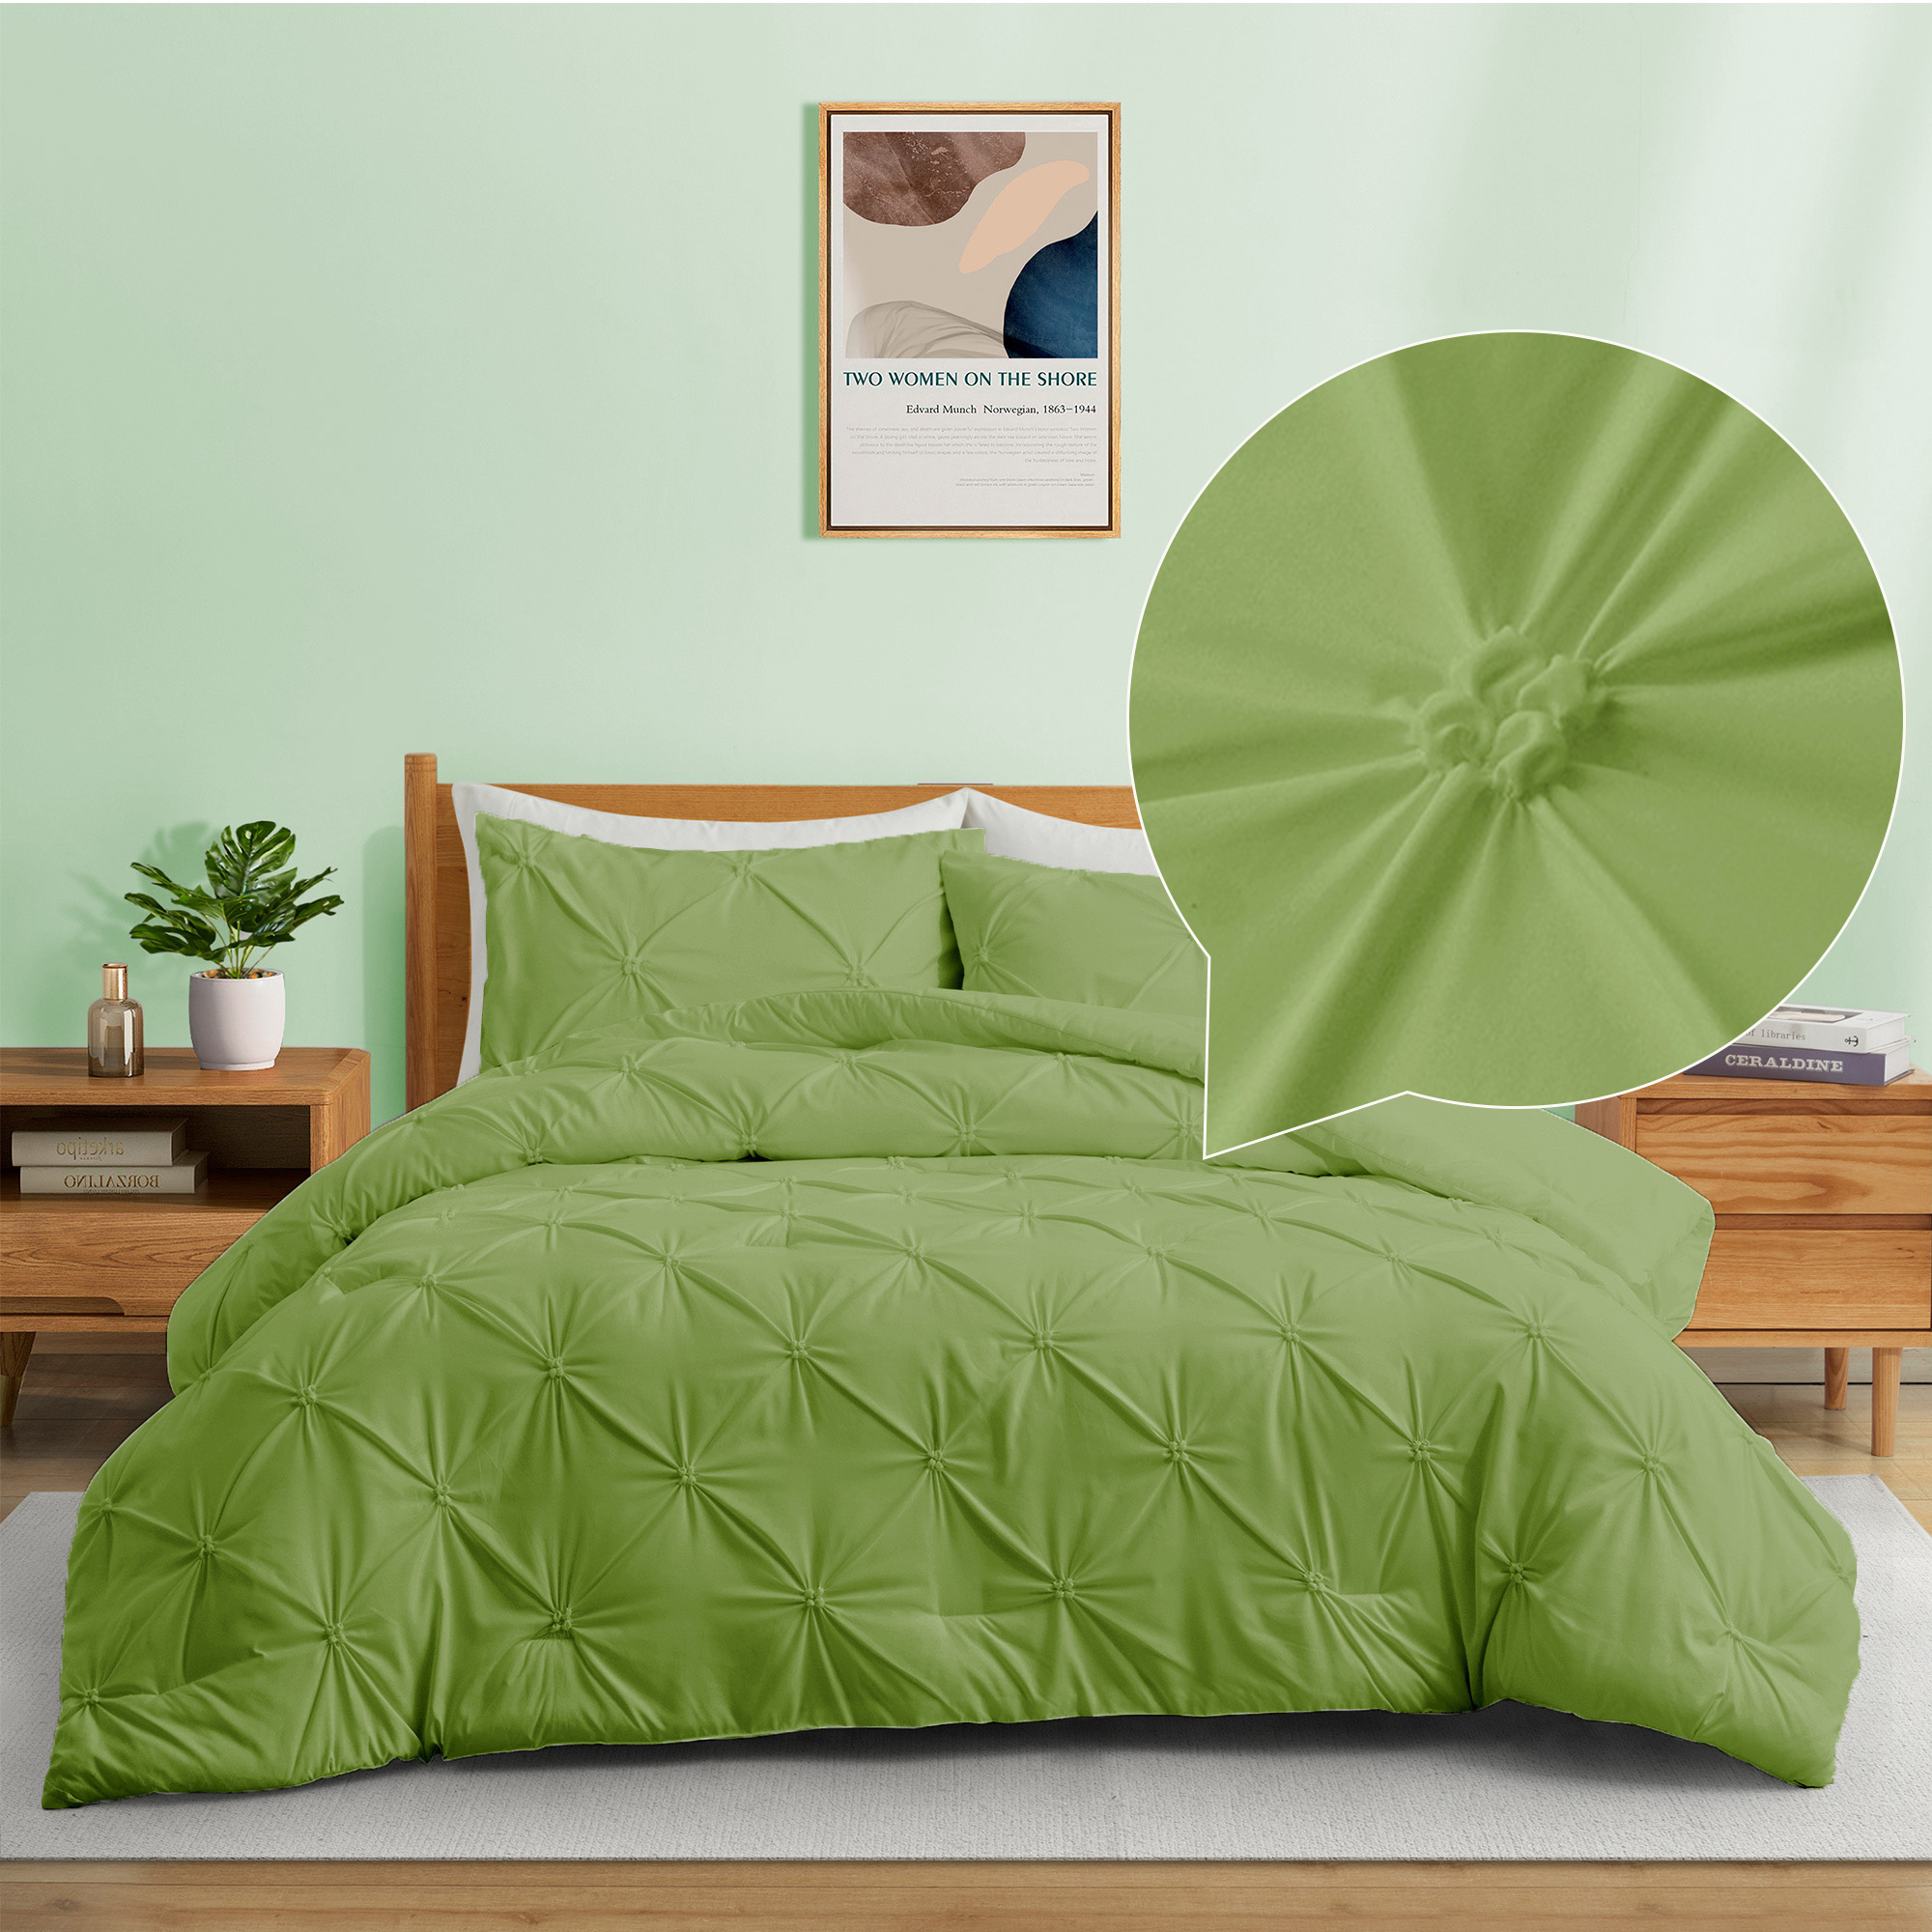 All Seasons Down Alternative Comforter Set, Pinch Pleat Design - Olive Green, Twin